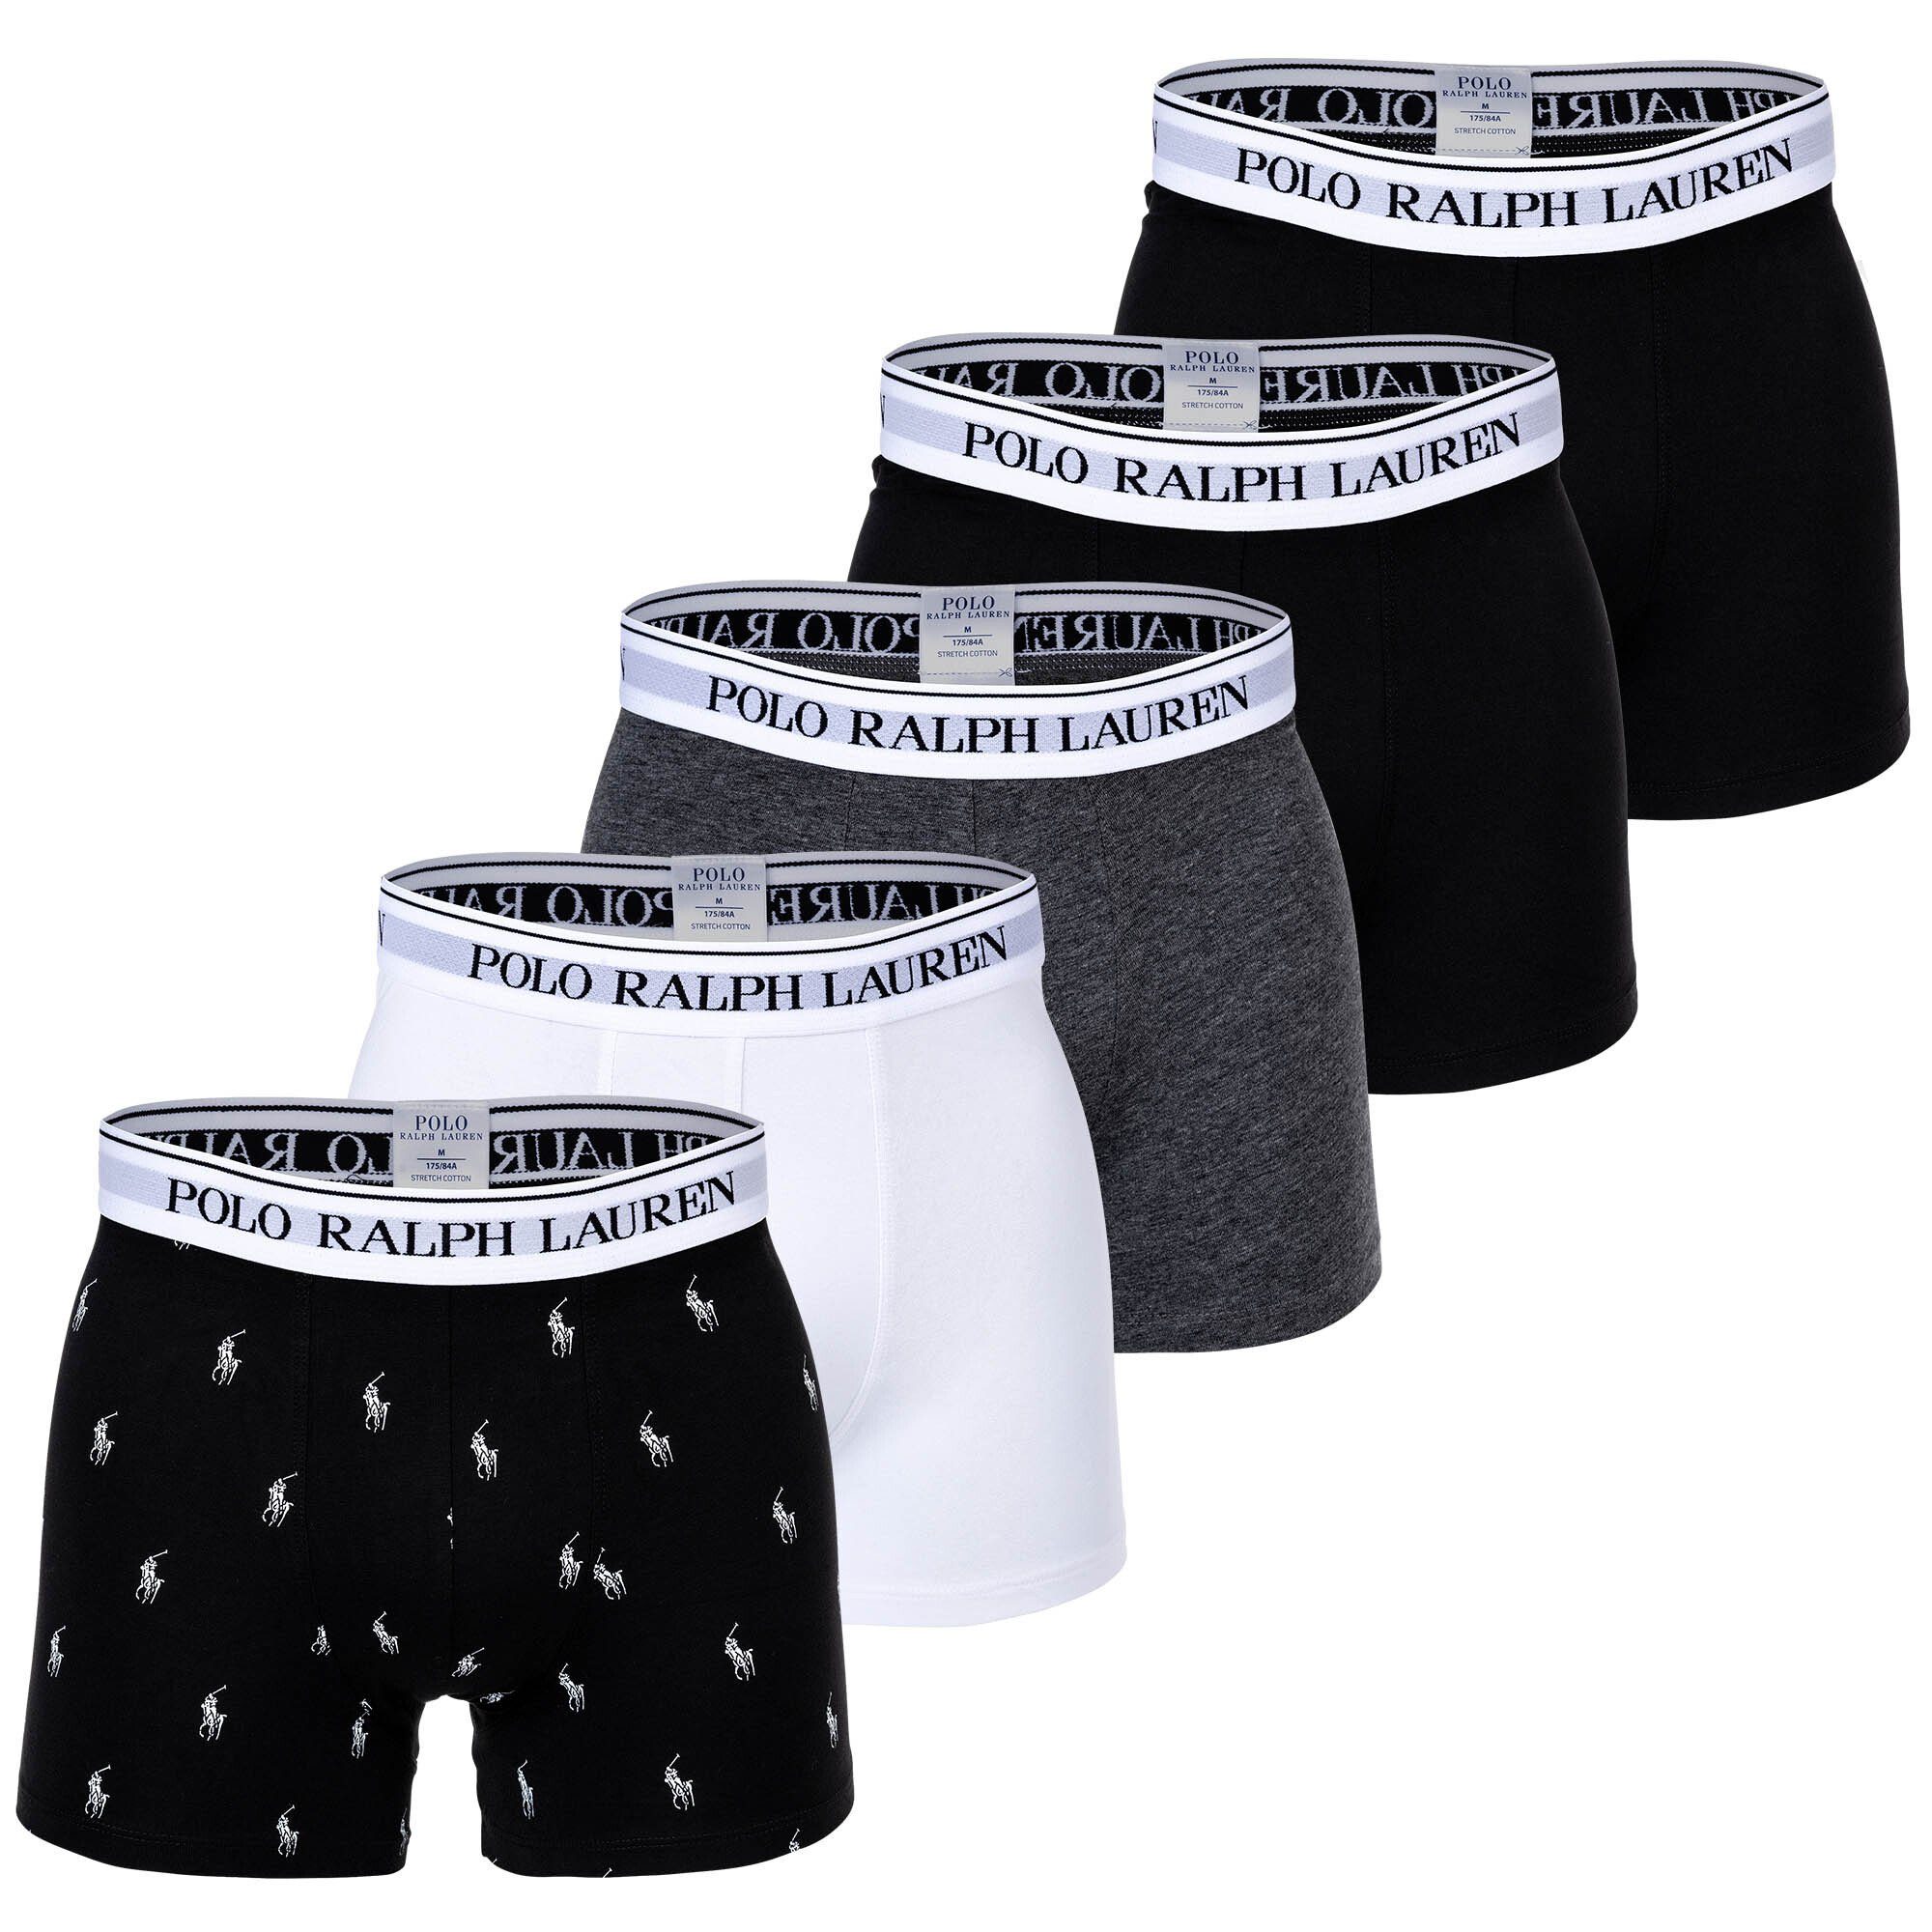 Polo Ralph Lauren Boxer Herren Boxer Shorts, 5er Pack - CLSSIC TRUNK-5 Schwarz/Grau/Weiß